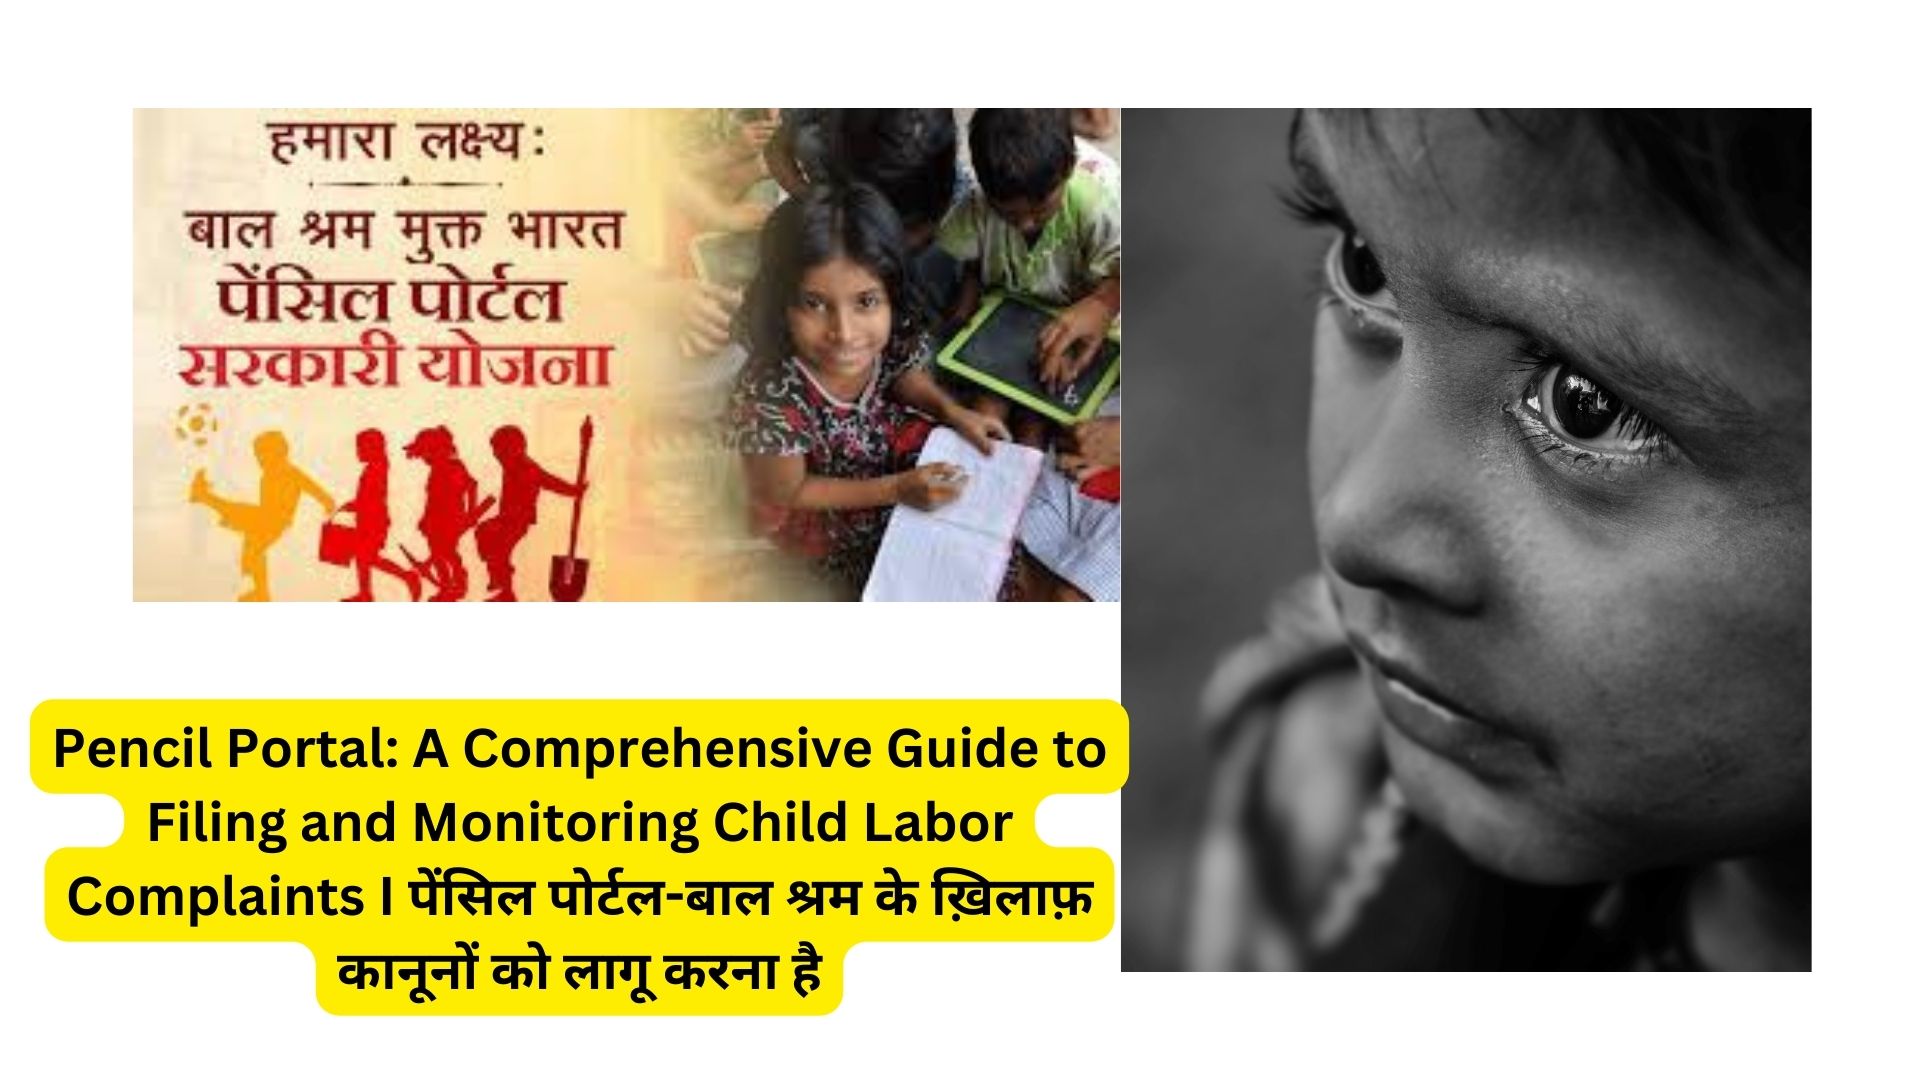 Pencil Portal: A Comprehensive Guide to Filing and Monitoring Child Labor Complaints I पेंसिल पोर्टल-बाल श्रम के ख़िलाफ़ कानूनों को लागू करना है